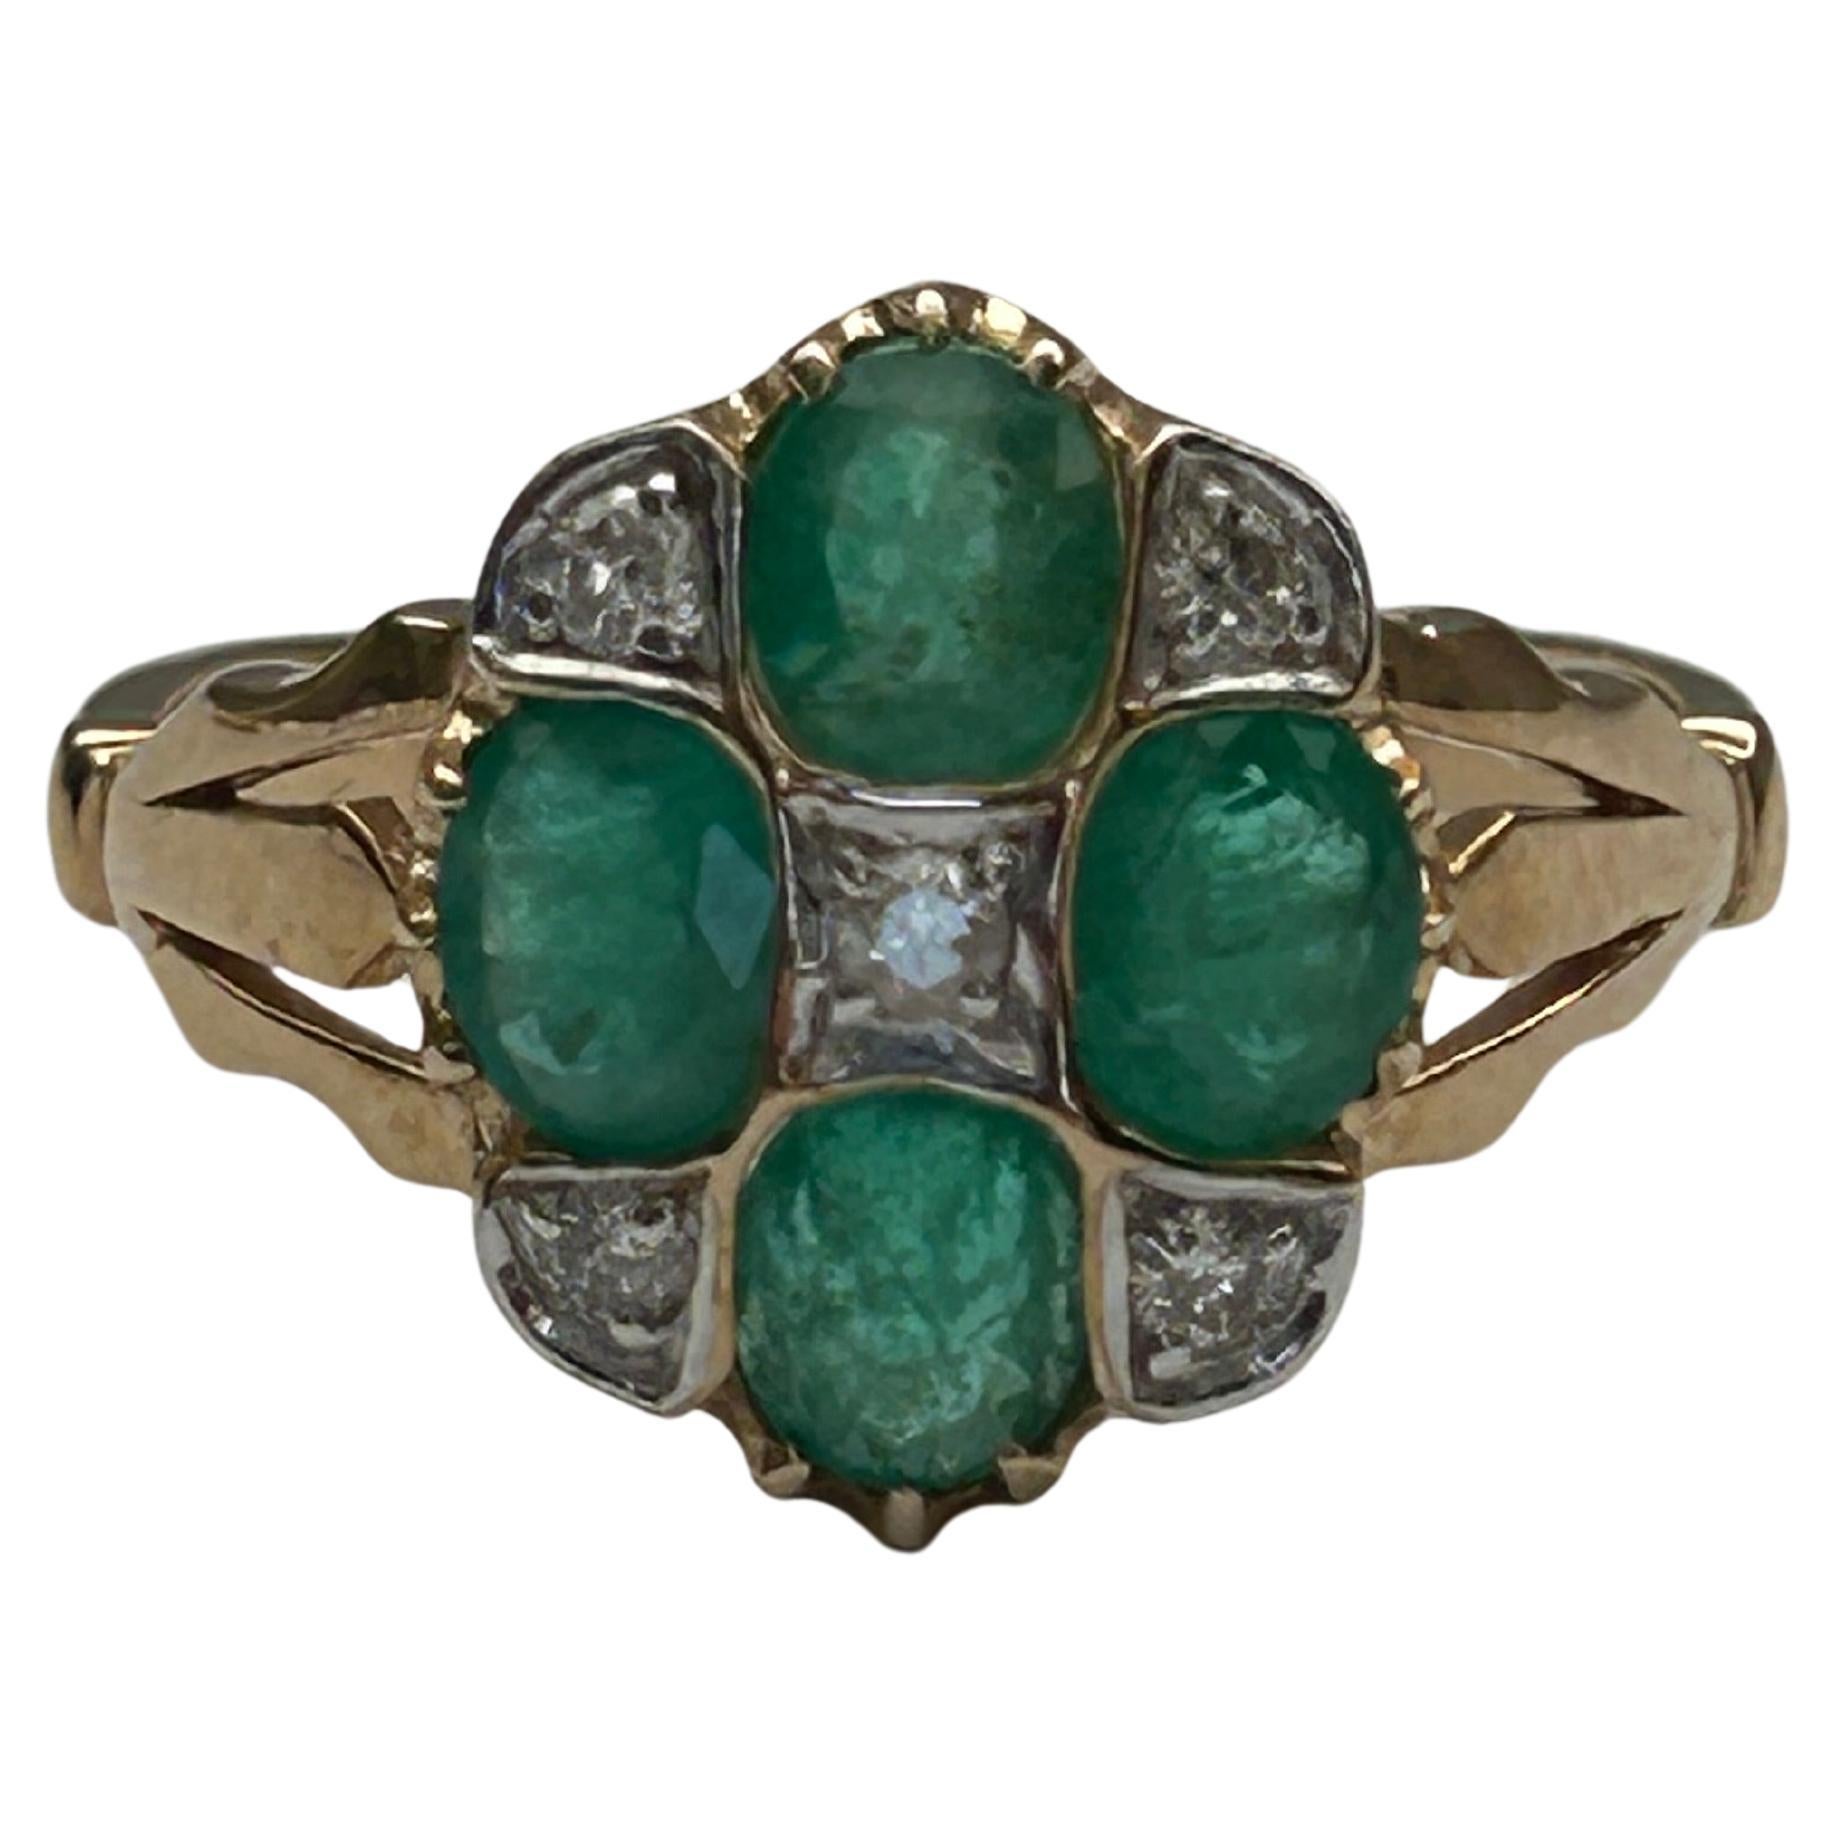 Smaragd (Est 1,5 Karat) & Diamant (Est 0,12 Karat) Cluster-Ring, 9 Karat Gelbgold. im Angebot